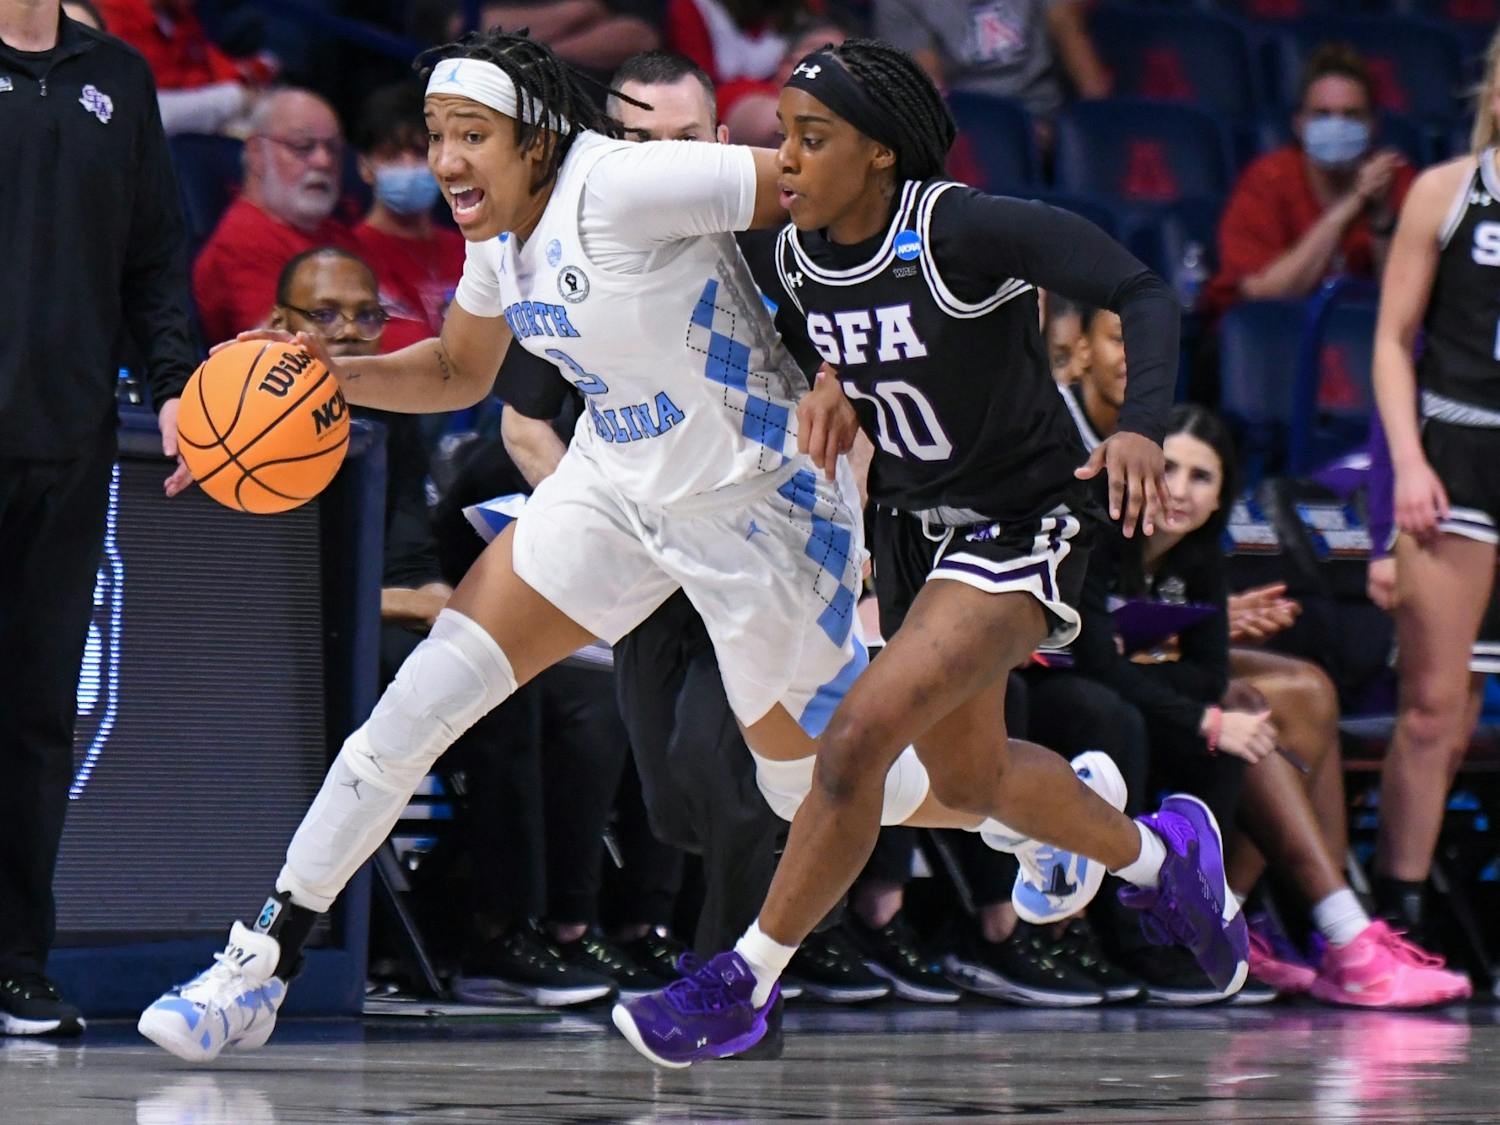 Gallery: Carolina Women's Basketball defeats Stephen T. Austin, advances to second round